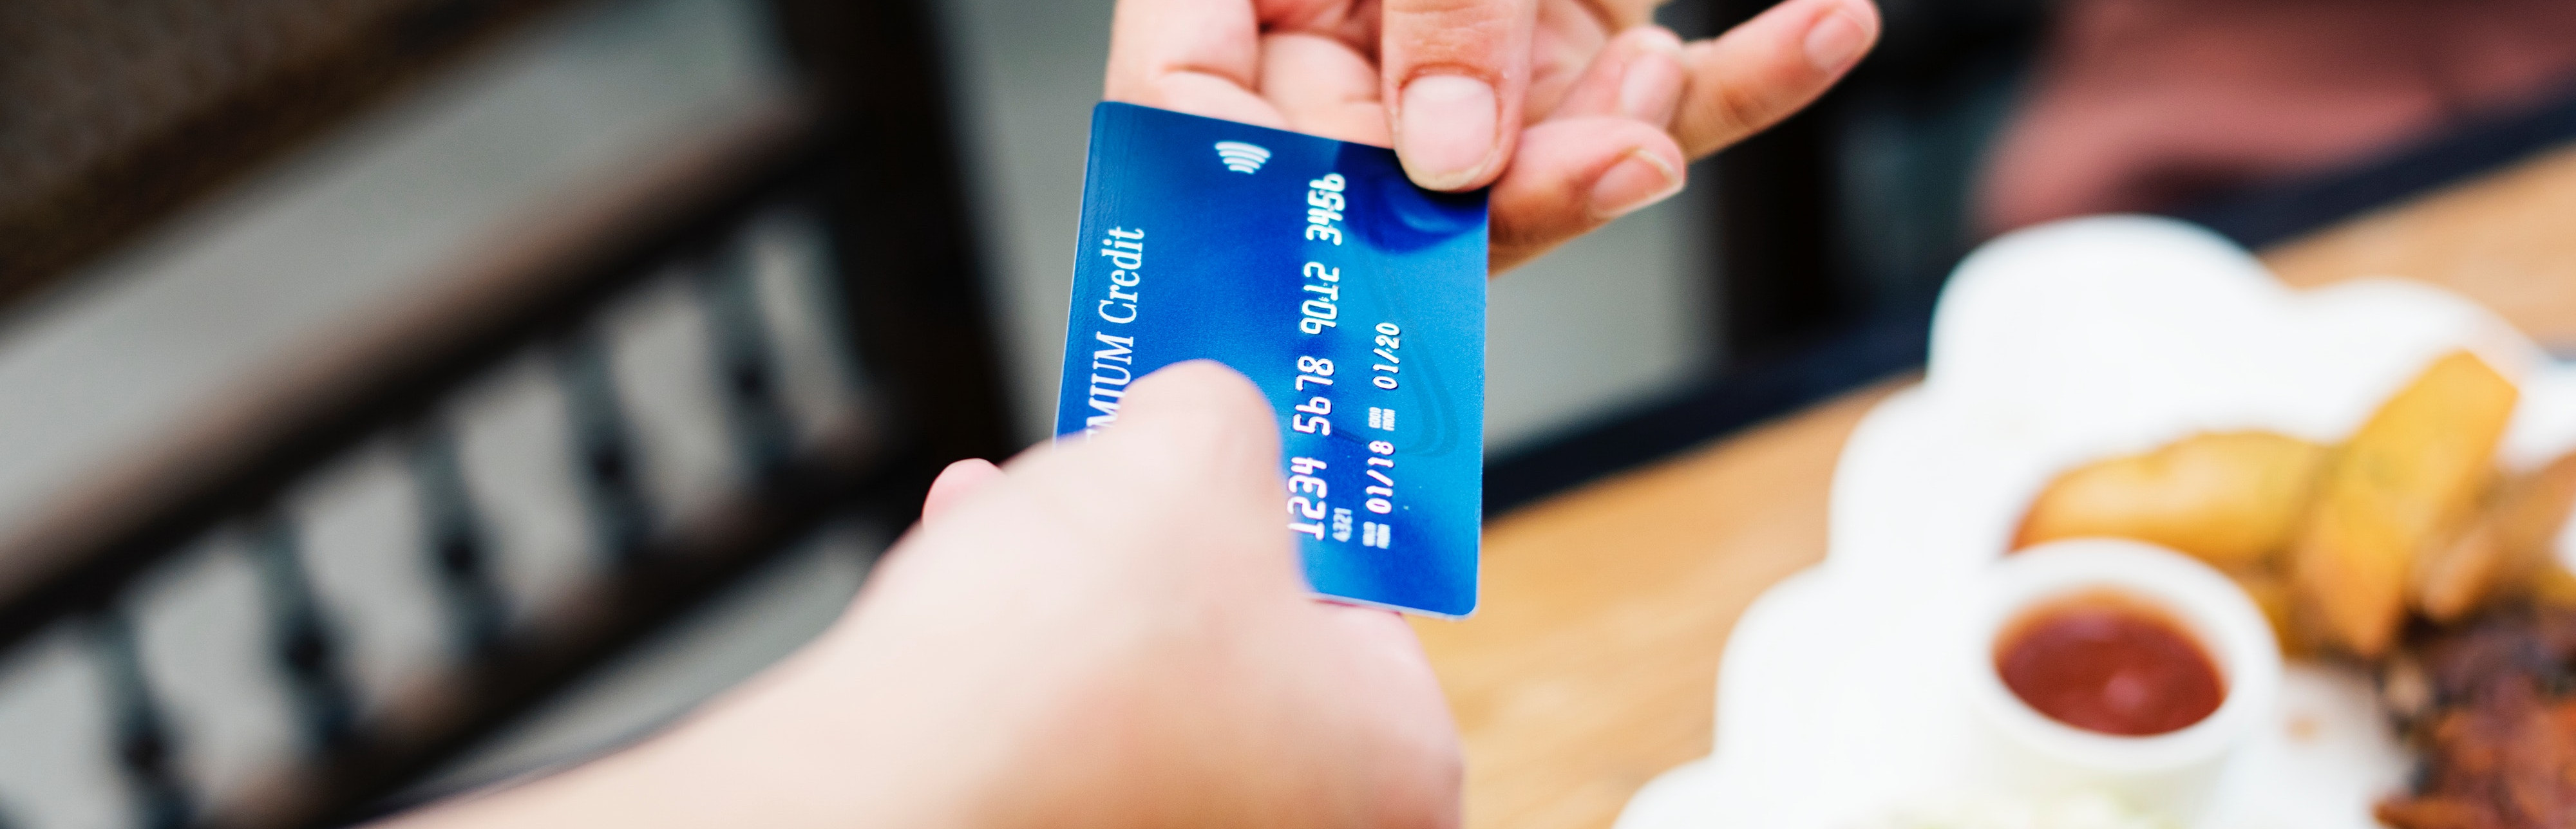 Advantages of Rewards Credit Cards